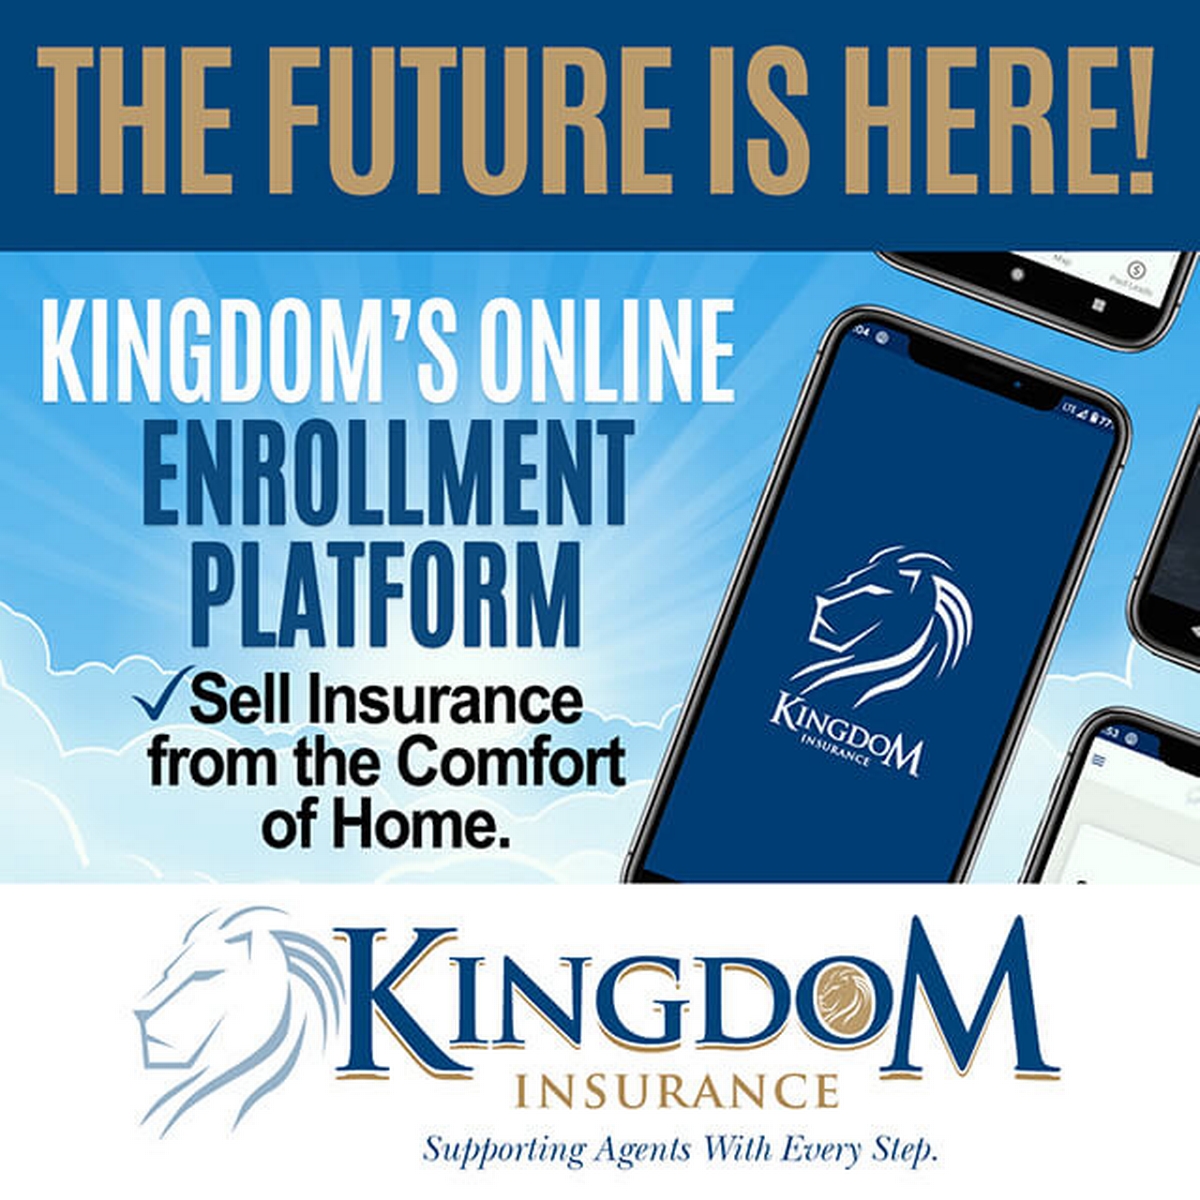 The future is here! Kingdom's online enrollment platform.